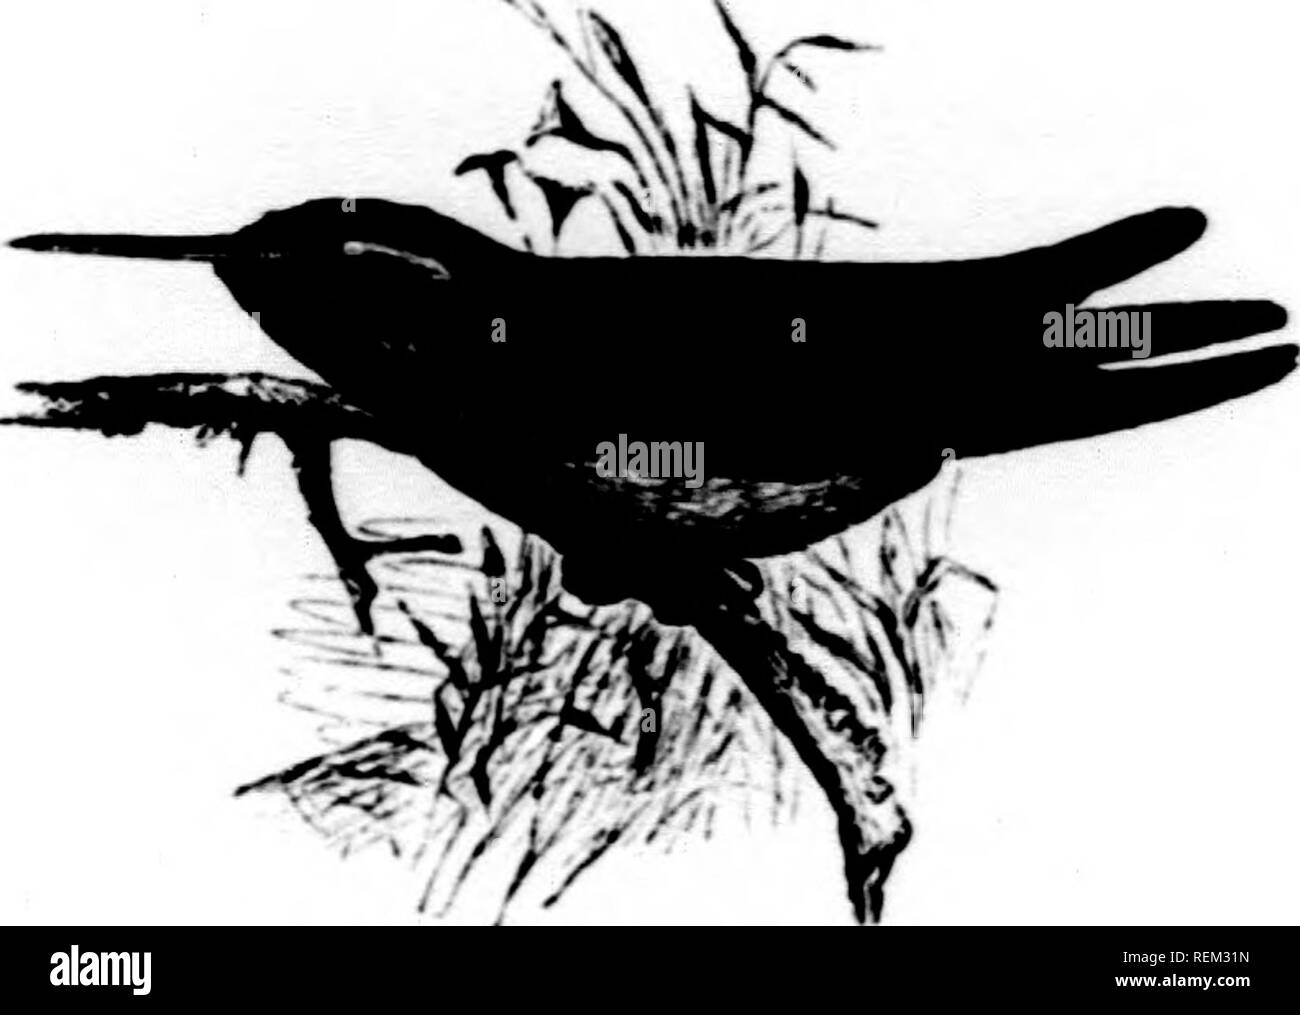 . Eine Geschichte der nordamerikanische Vögel [microform]: Land der Vögel. Vögel - Nordamerika; Ornithologie - North American; Oiseaux - In du Nord; Ornithologie - In du Nord. TKOCIIILID. E - die lirMMlNO - BIKI): ir, 7 HeliopsDdica xantusi, Lawkknce HUMMINO XANTITS'S - BIBD. Arrmzilia xantusi, Lawiu: n "k ann. N.Y. Lauge. VII, EIN |&gt; ril, l^ Co, 100. JlrliojKcdun xantusi, Gould, Mo. Troth. II,&gt;]. Ixv. - In. Intiod. Trodi. Gl. -Ei. i.n.r, 111. Vögel N. ÄA xi, Platte. - C'uuI'ER, Orn. C'al. I, 1870, 305. "Ilcliop irficn cffs/fnicoonuh, L. vwREXCE, Ann. X.Y. Lauge. 1860, 145 (tenialc). - Elliot, ICH Stockfoto